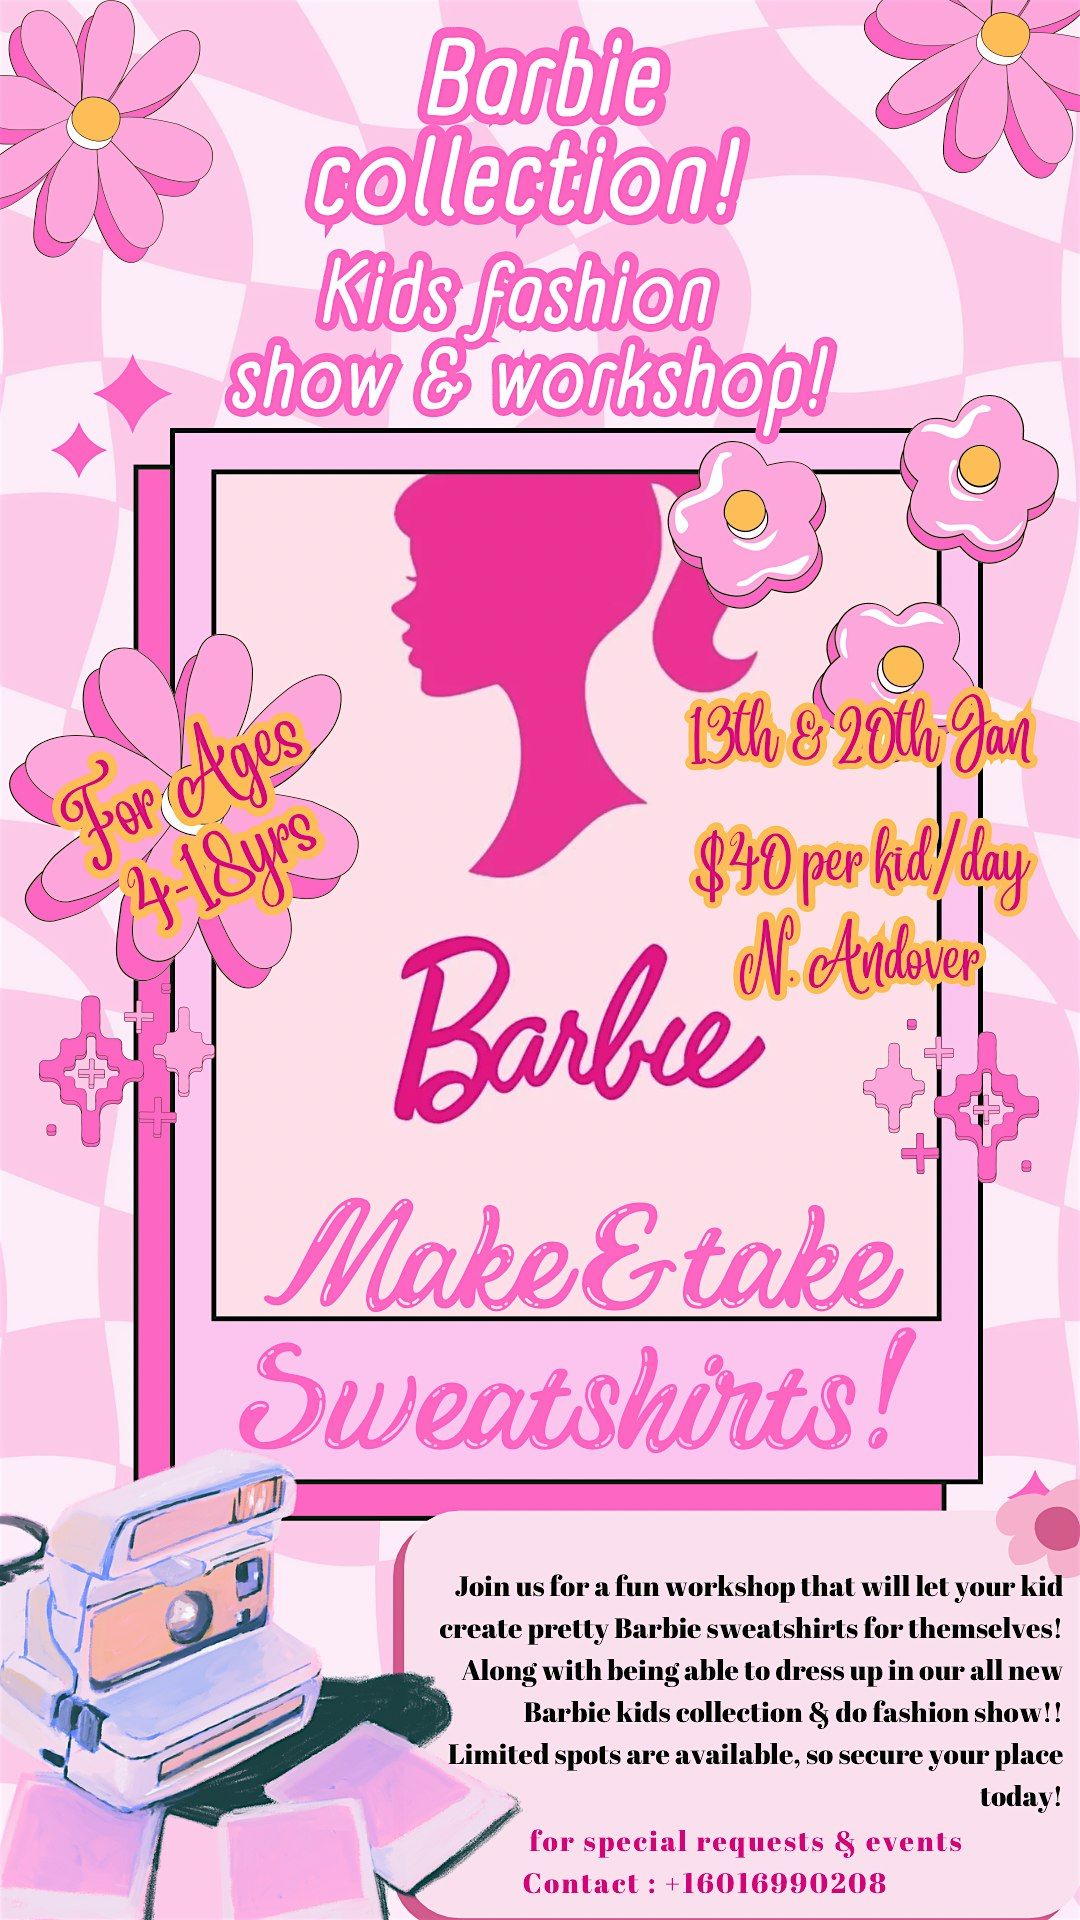 Barbie Style Sweatshirt and Fashion Show for Kids